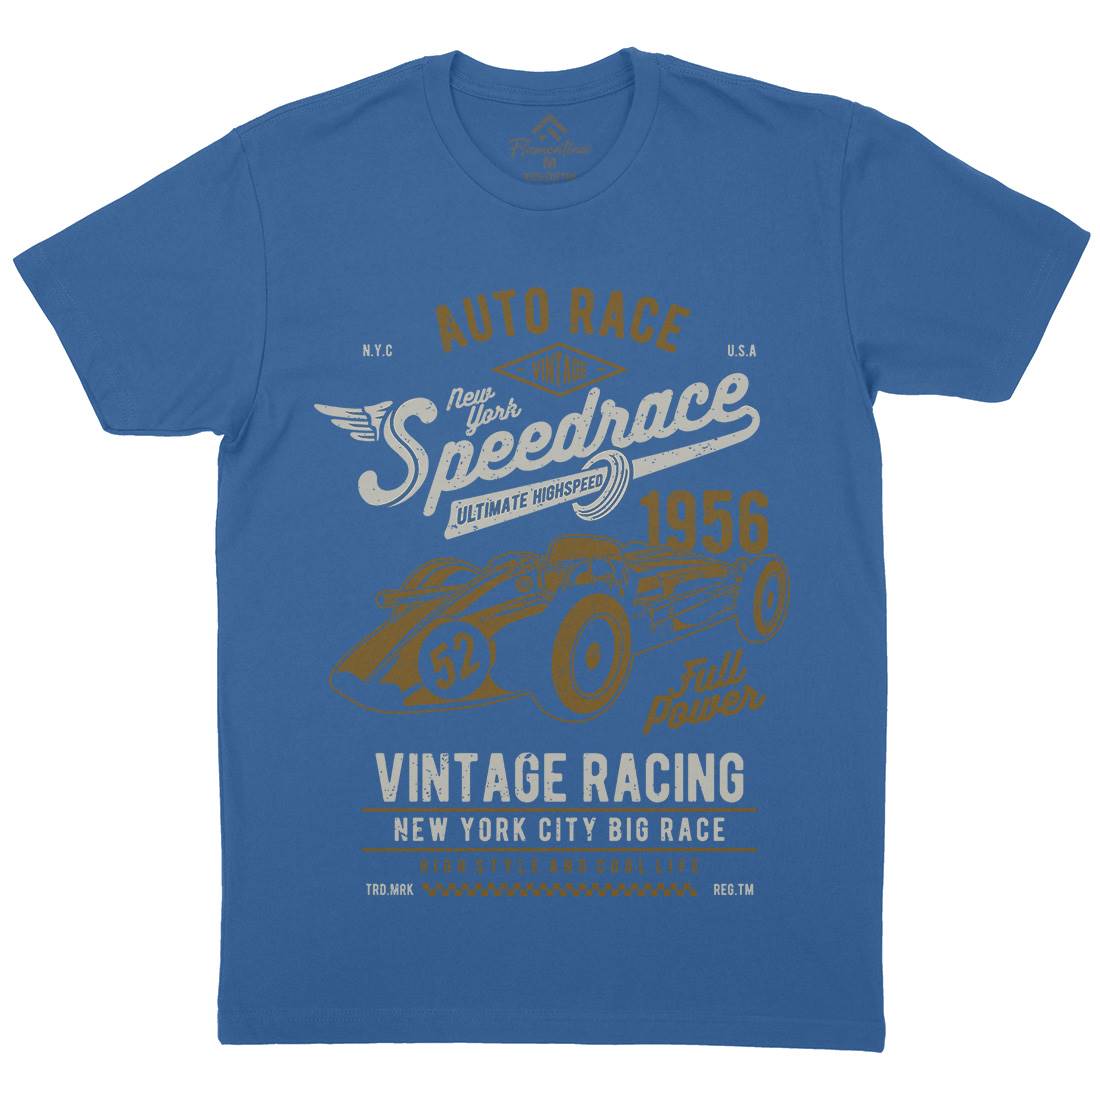 Vintage Speedrace Mens Crew Neck T-Shirt Cars A788